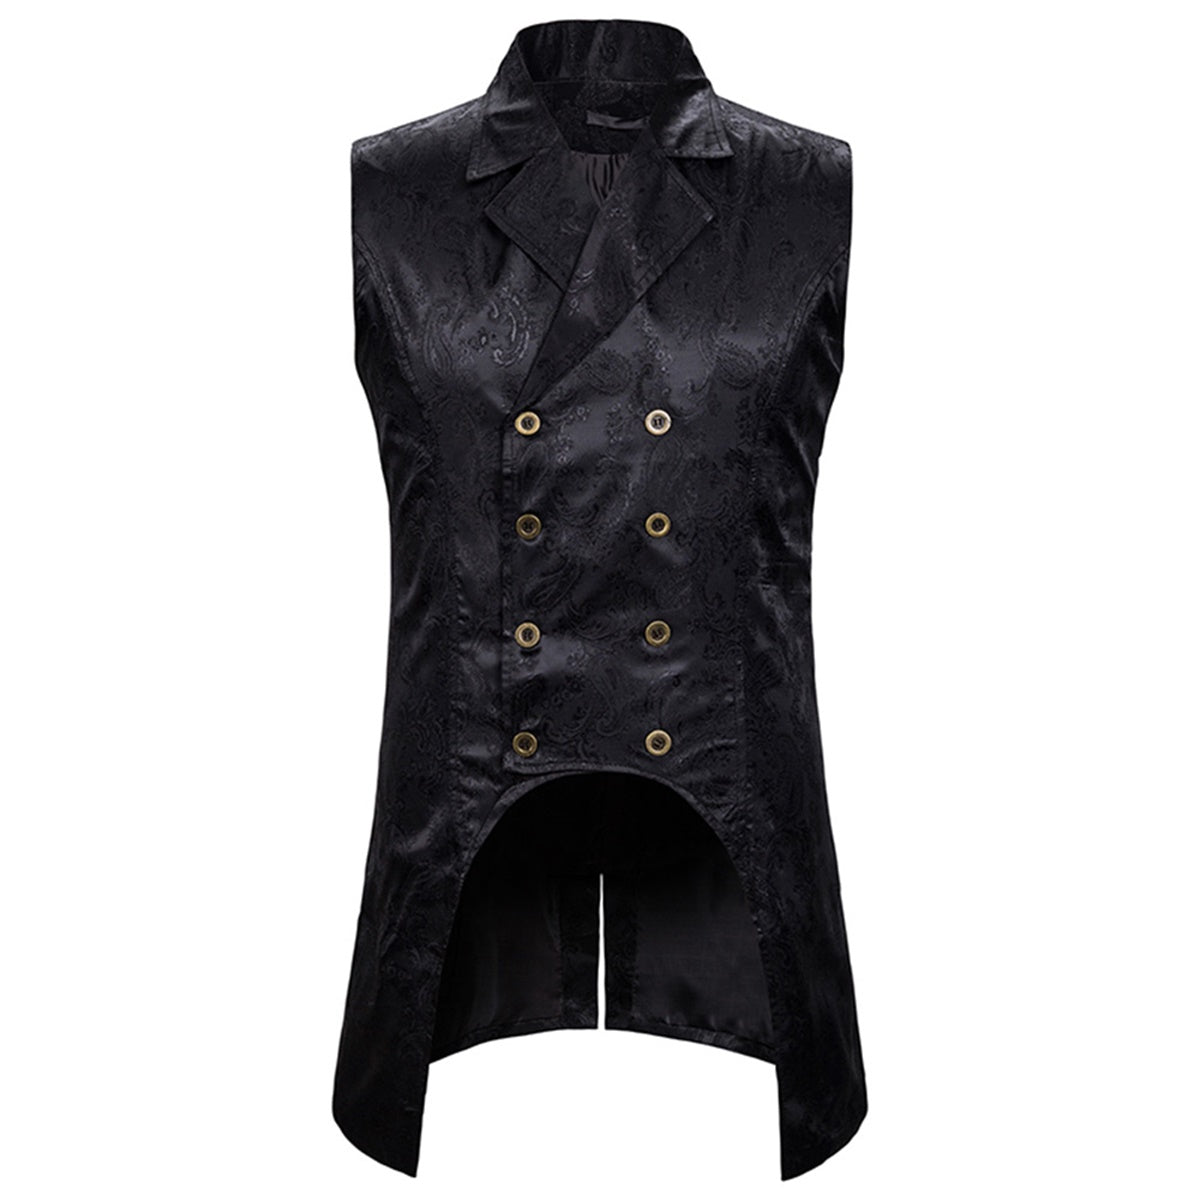 Paisley Dress Vest Floral Sleeveless Tailcoat Black